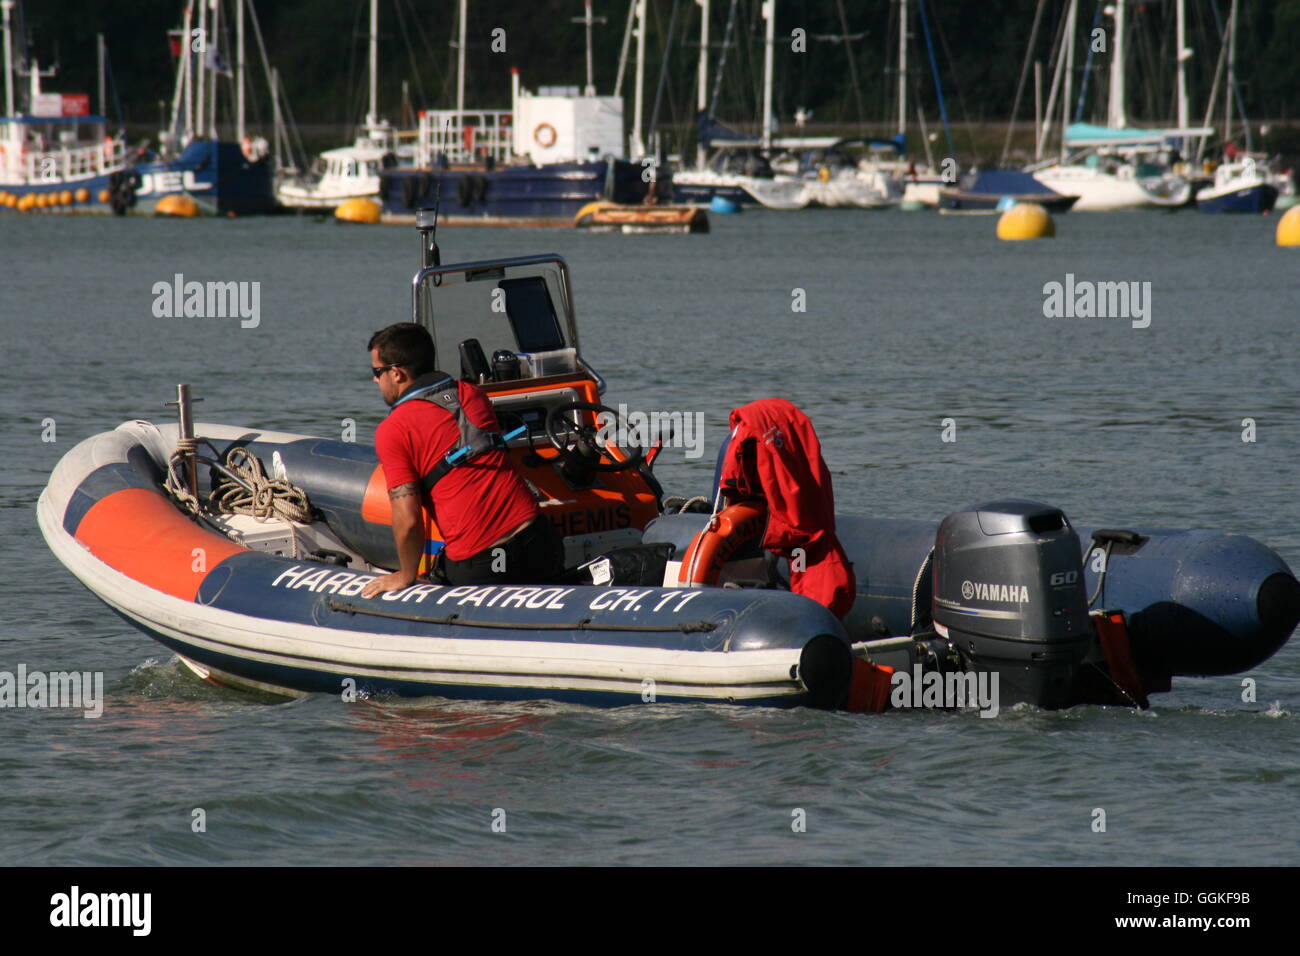 https://c8.alamy.com/comp/GGKF9B/harbor-harbour-harbour-patrol-boat-dartmouth-harbour-dartmouth-boats-GGKF9B.jpg